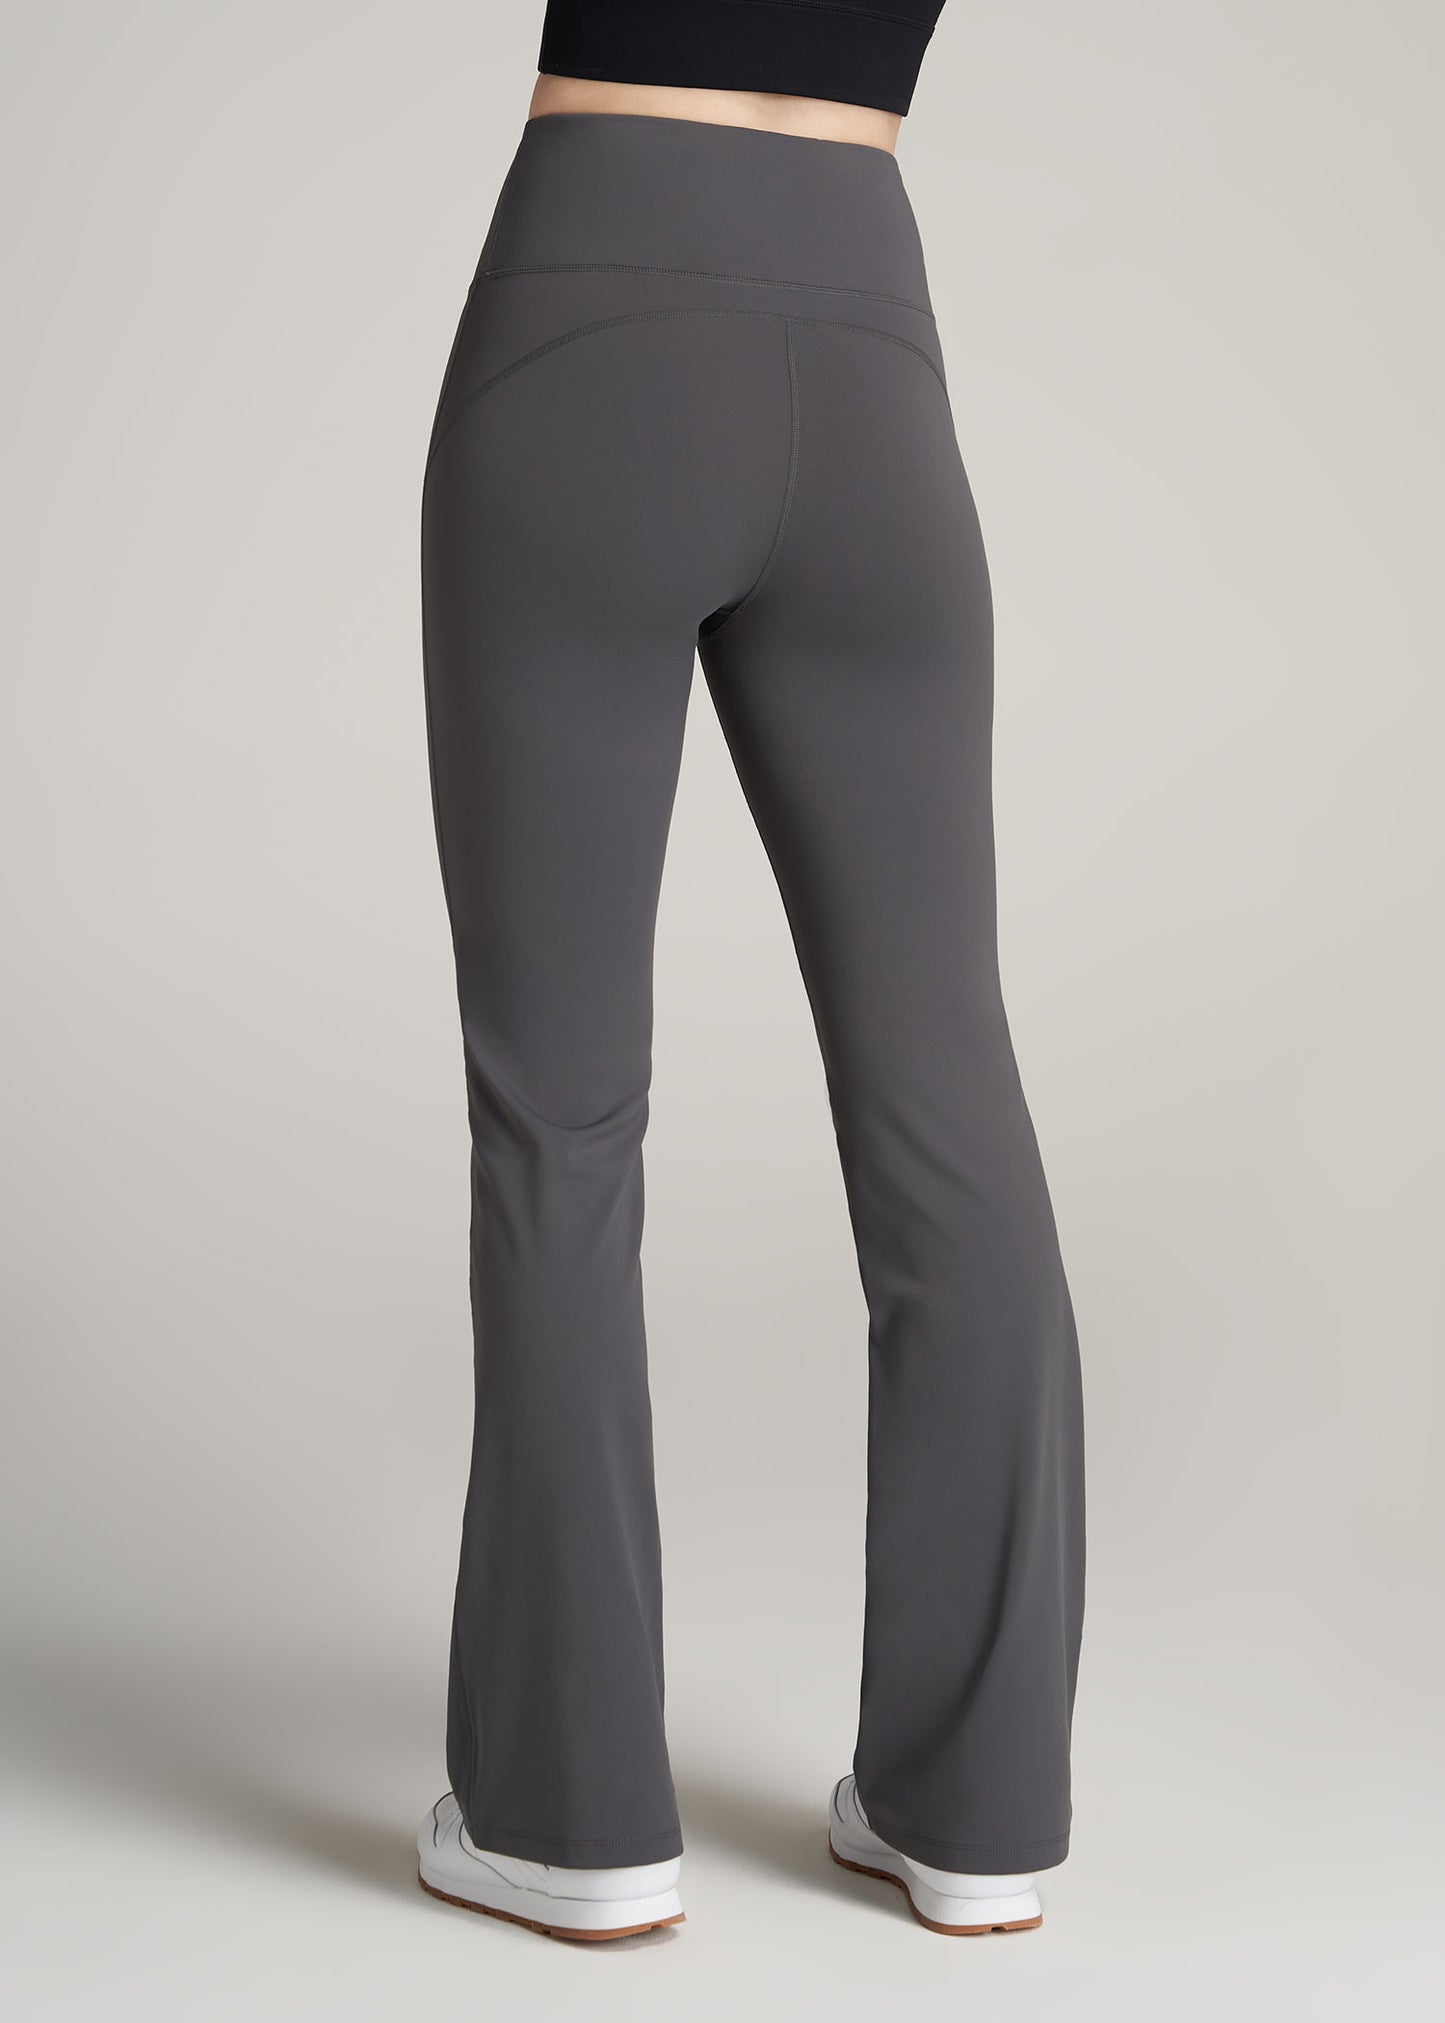    American-Tall-Women-Balance-OpenBottom-Yoga-Pant-Charcoal-back